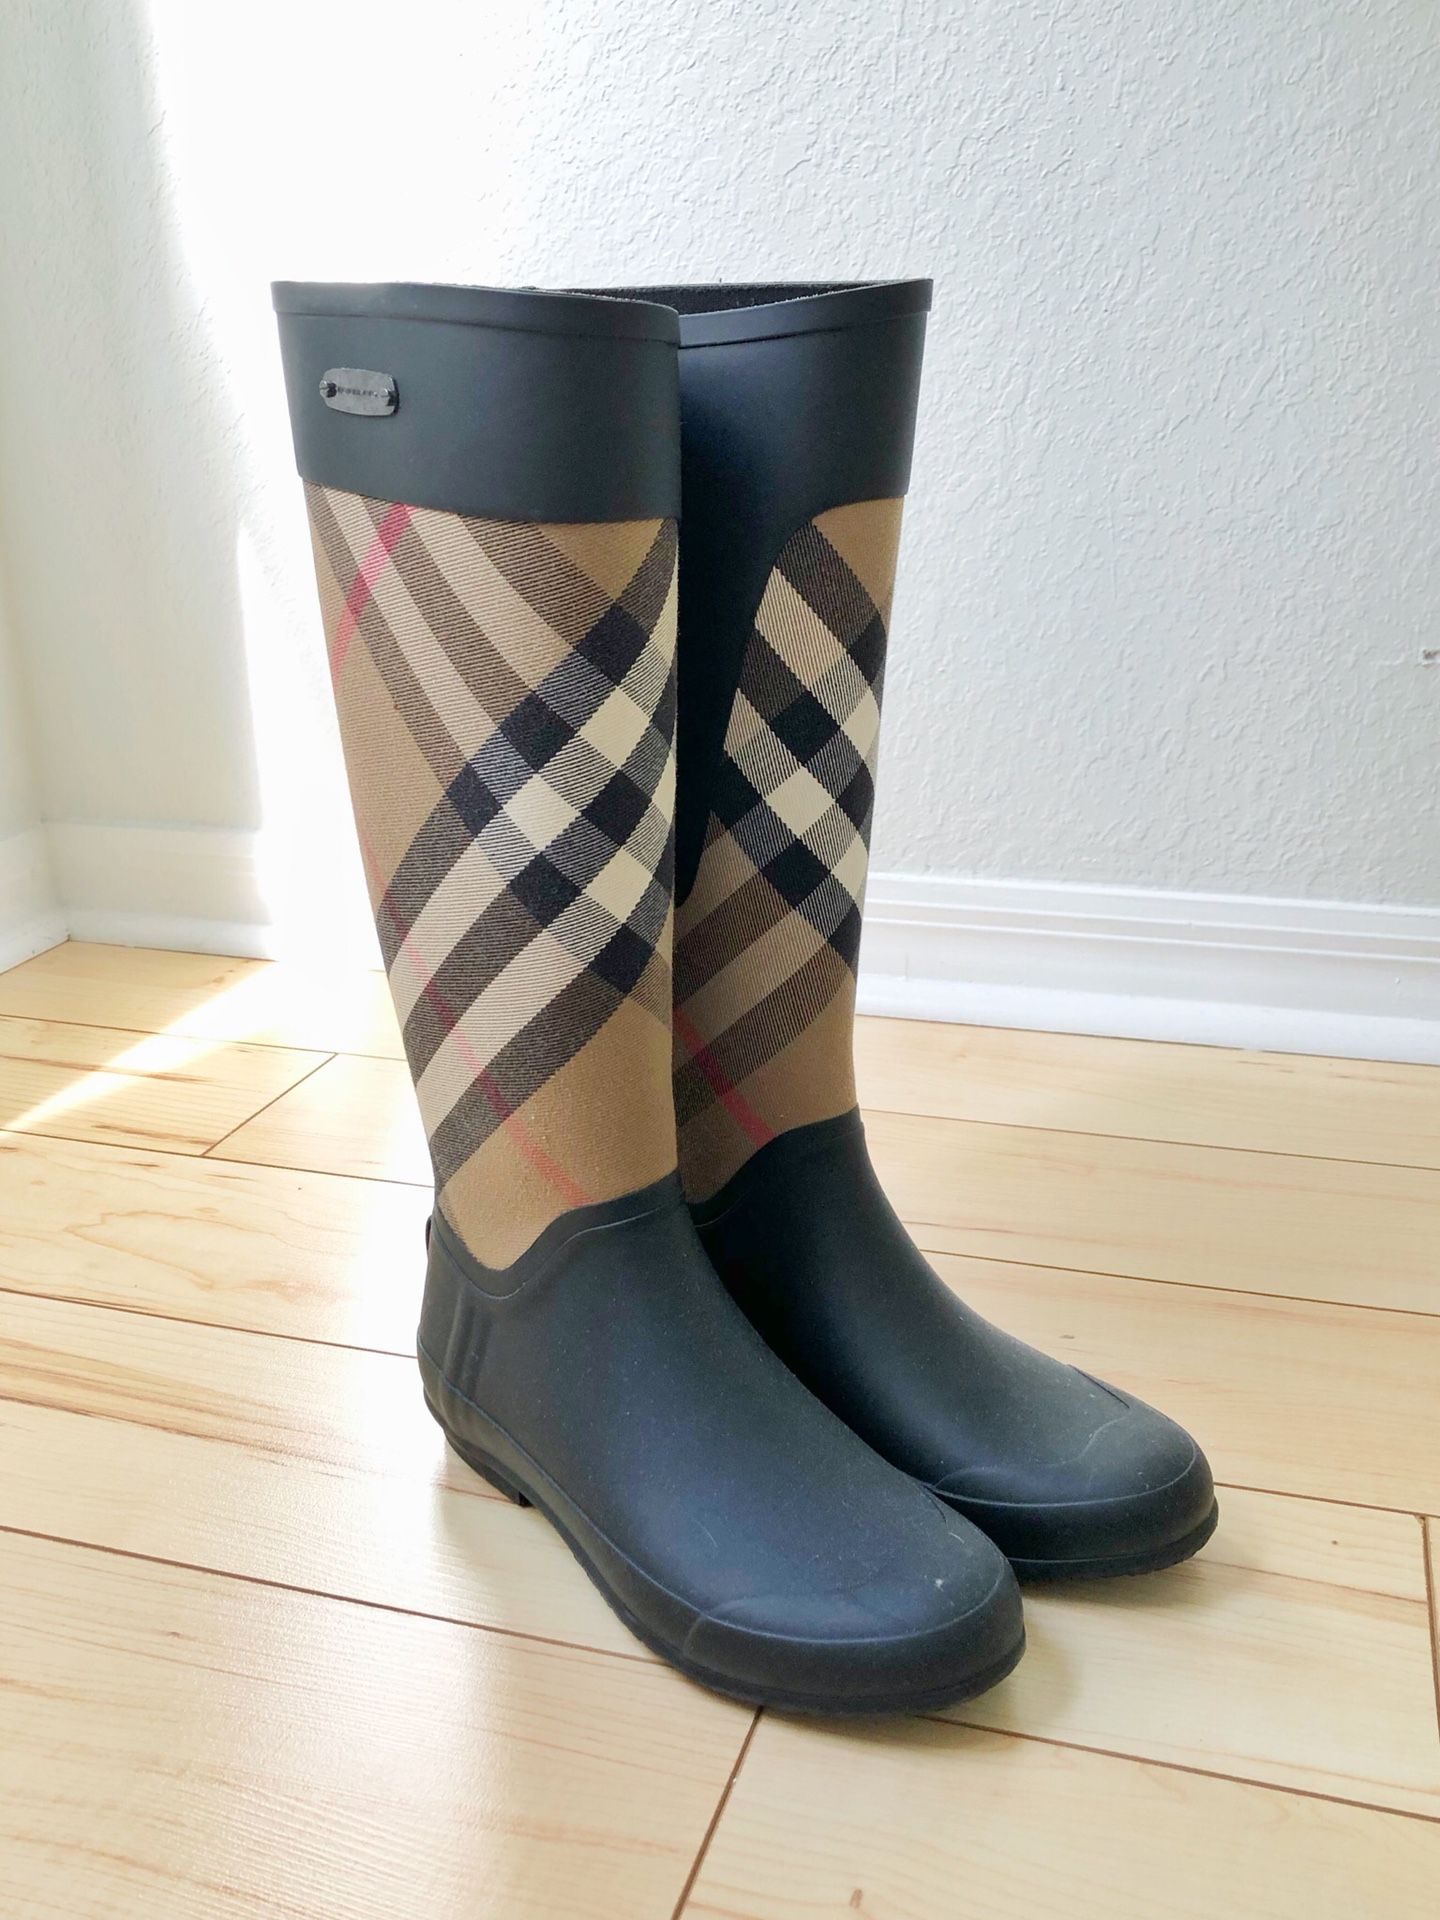 Burberry rain boots size 35/5